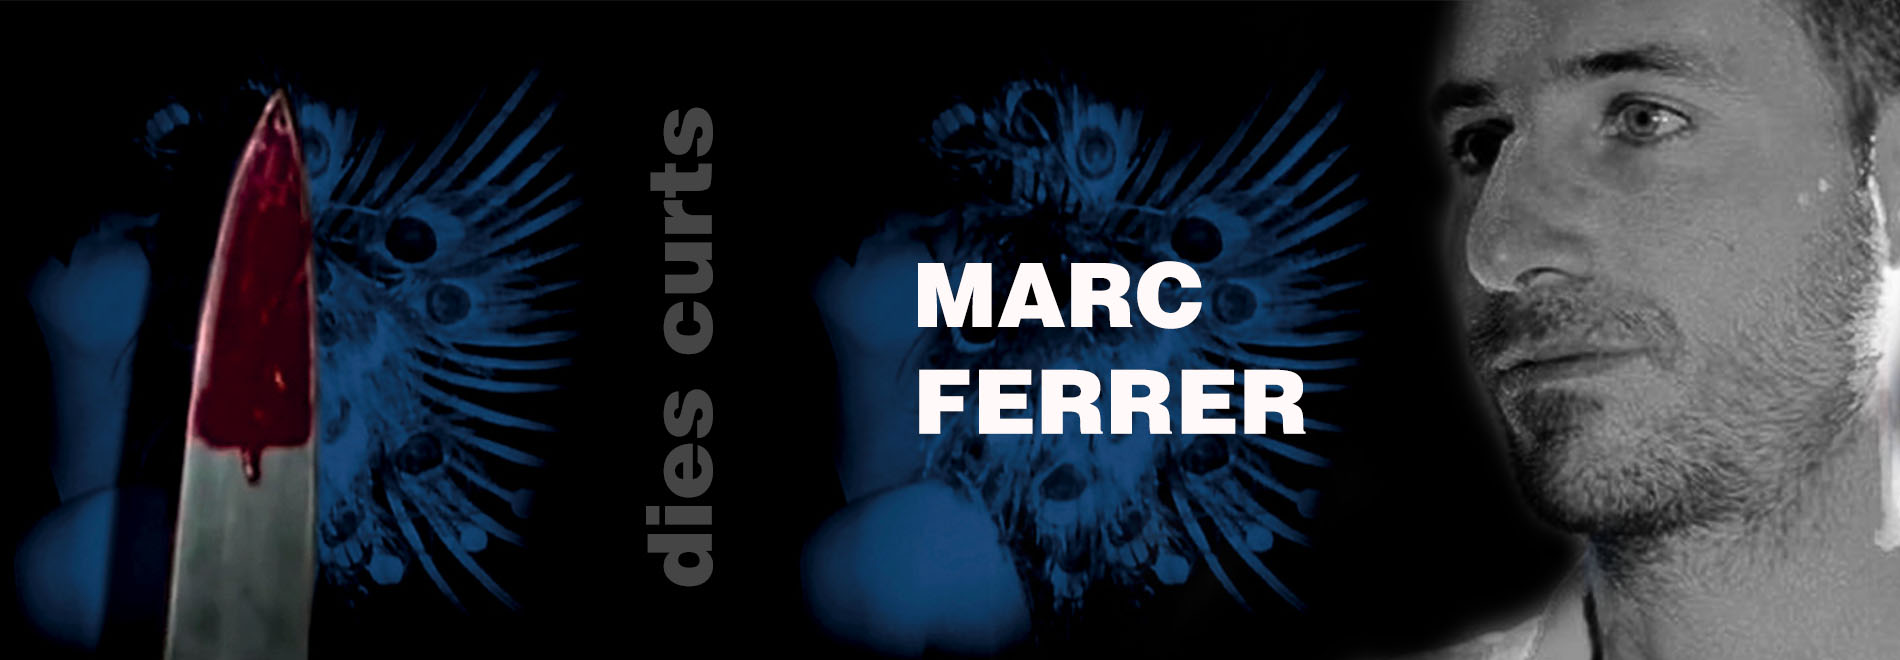 Dies curts - Marc Ferrer